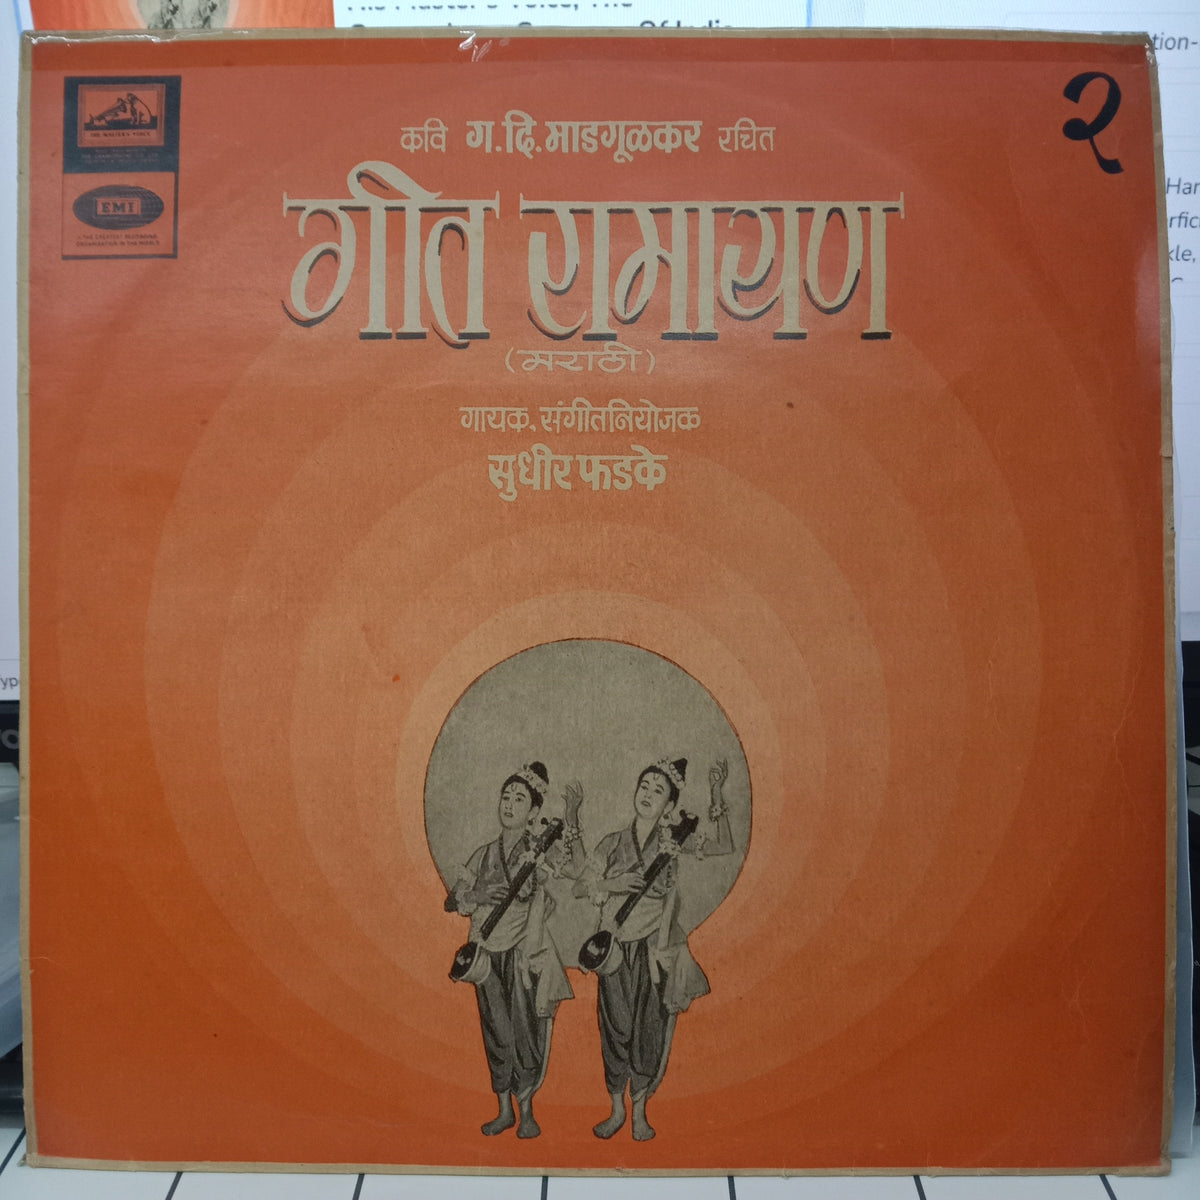 Sudhir Phadke - गीत रामायण - २ (Vinyl)